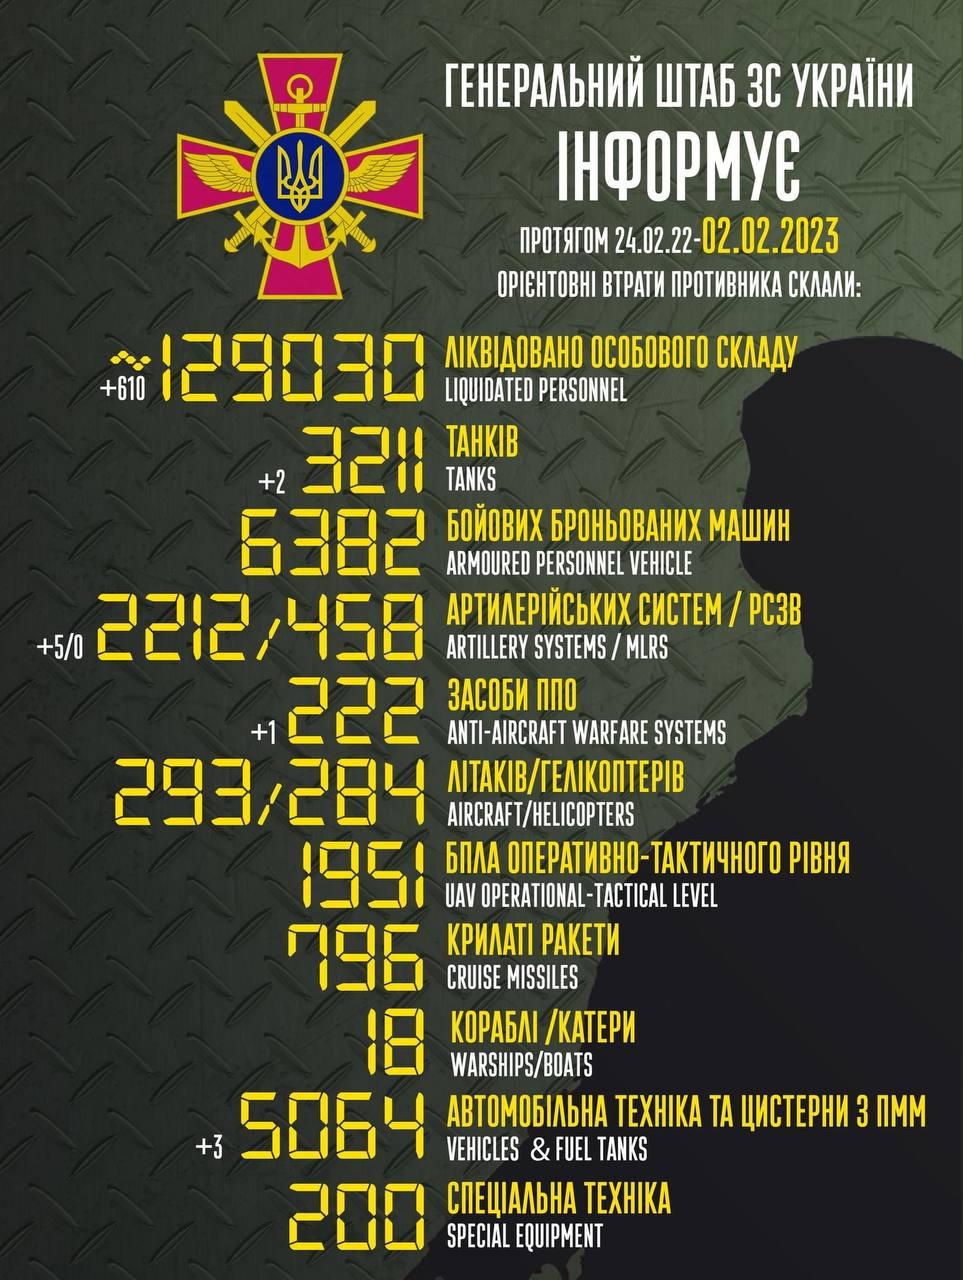 Russia’s losses in Ukraine as of 2/02/2023